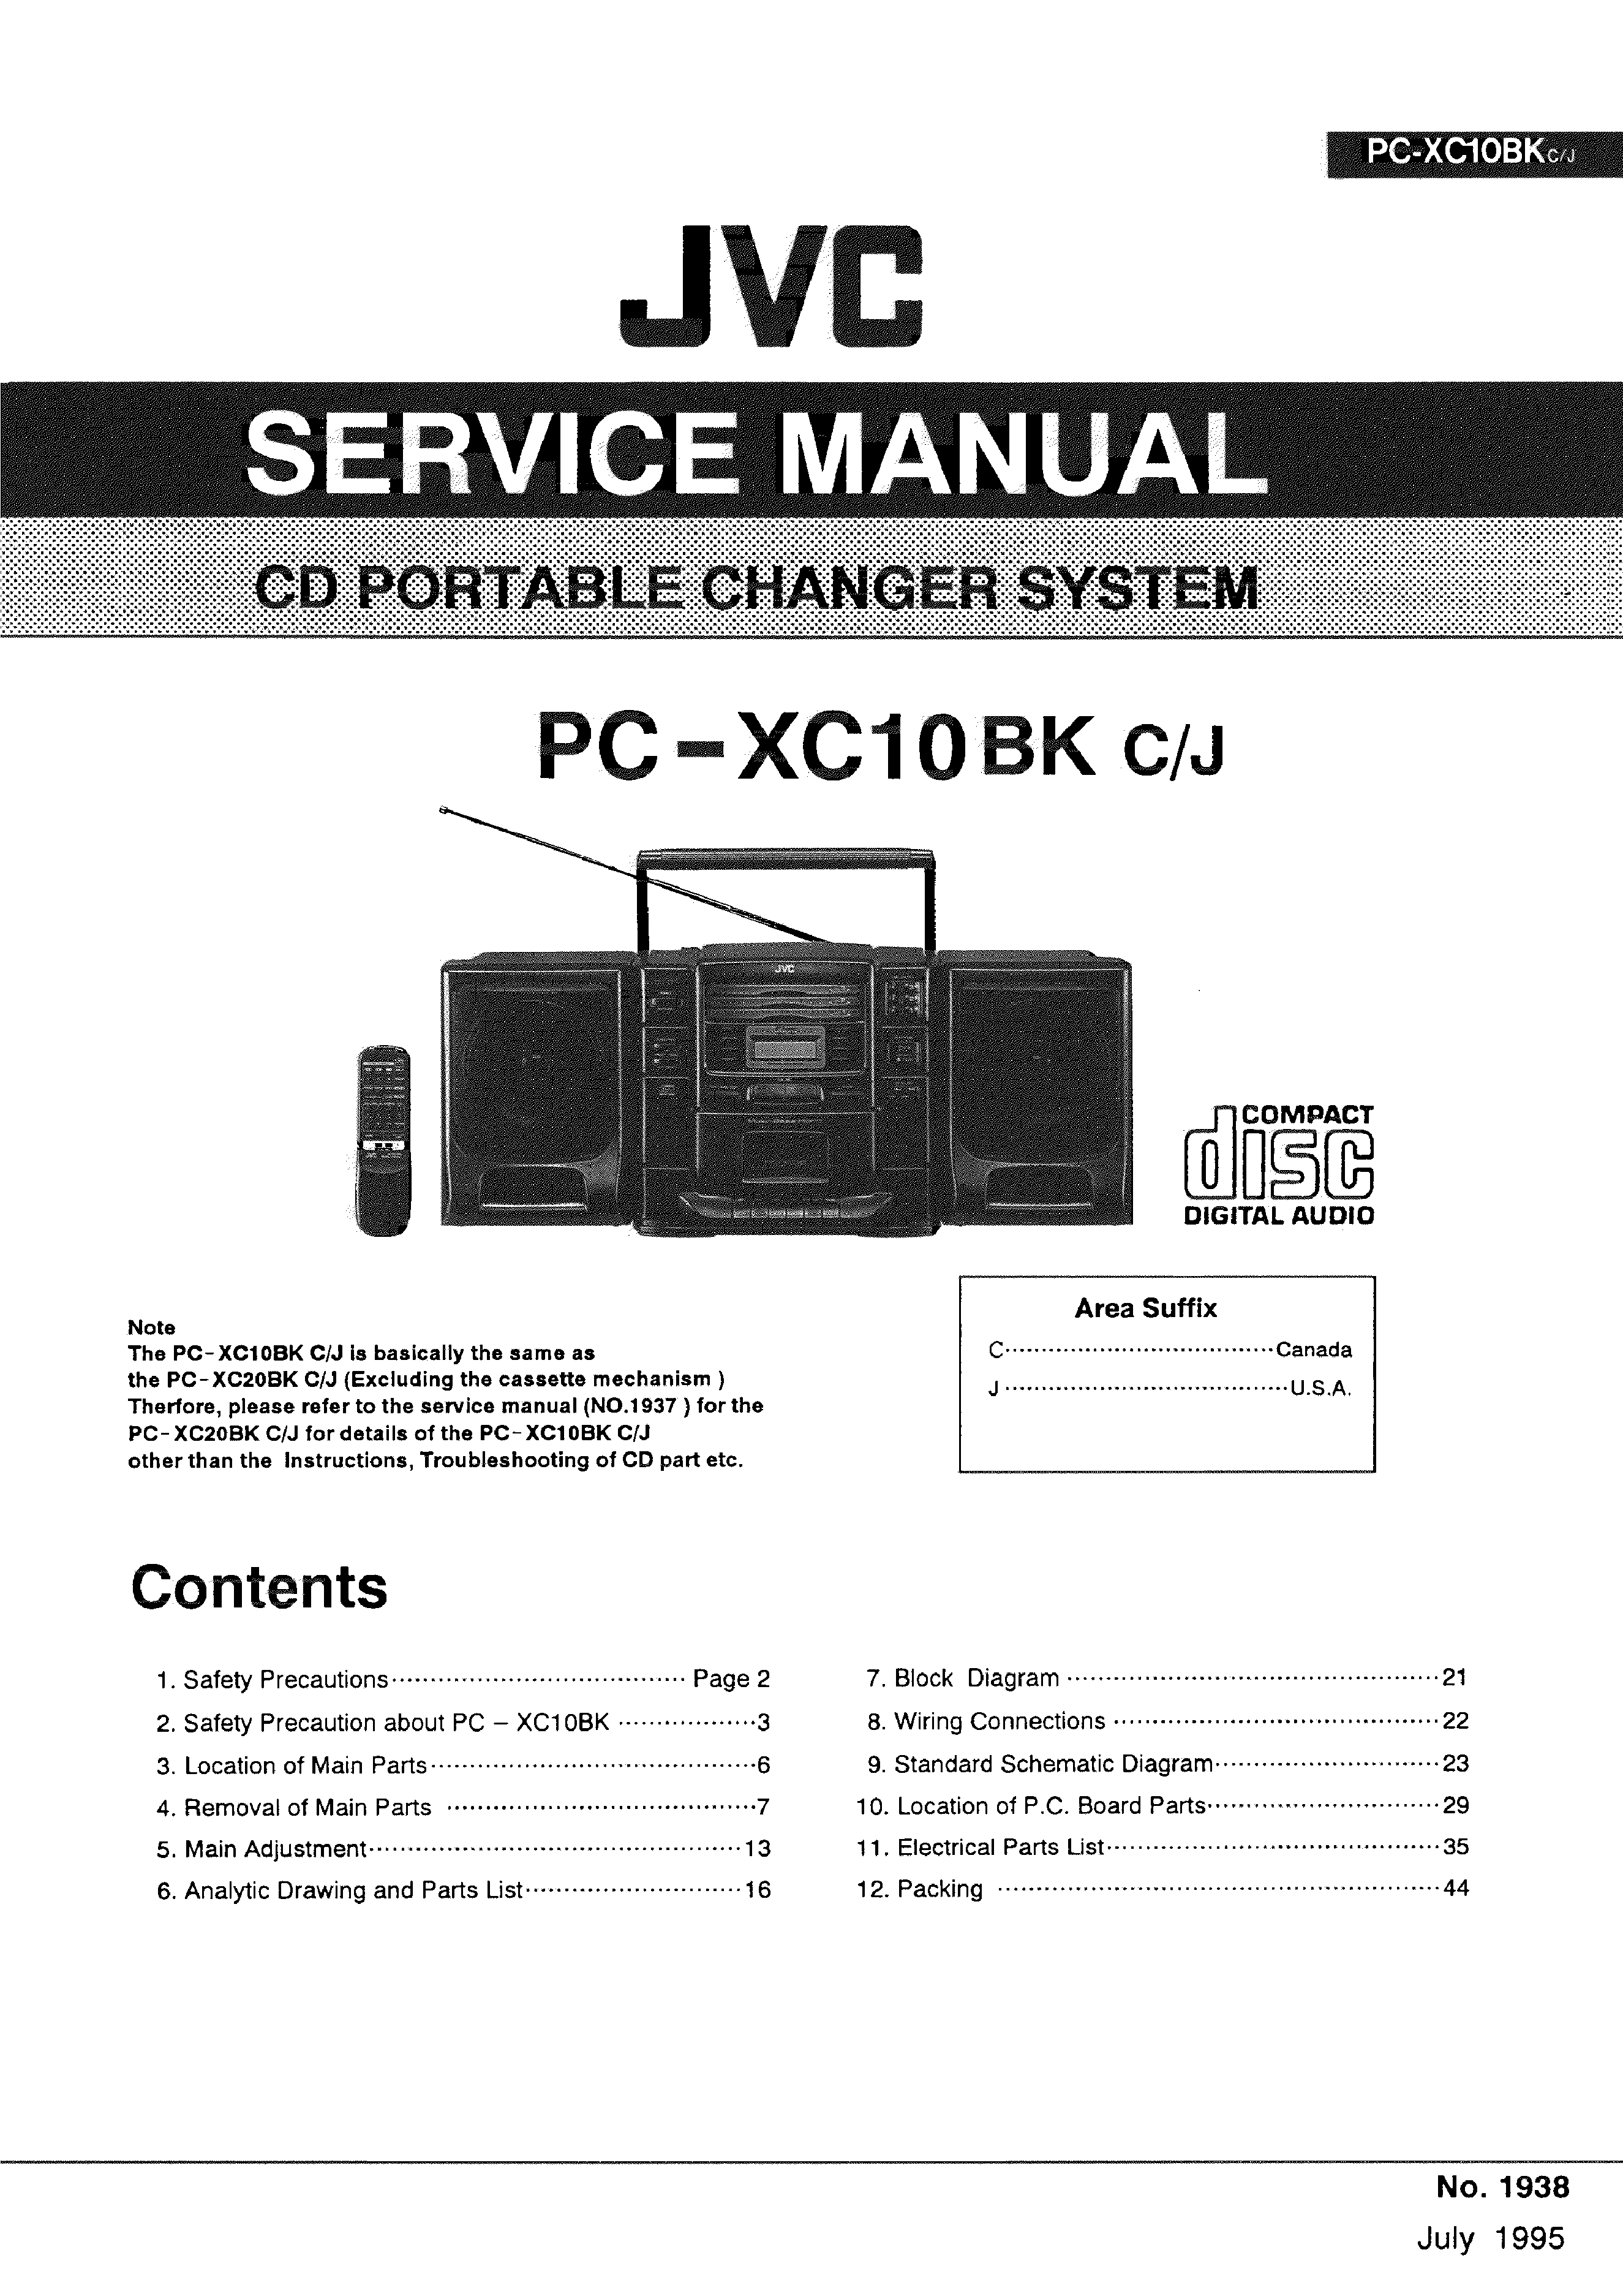 Free download Jvc KWNT 1 Service Manual